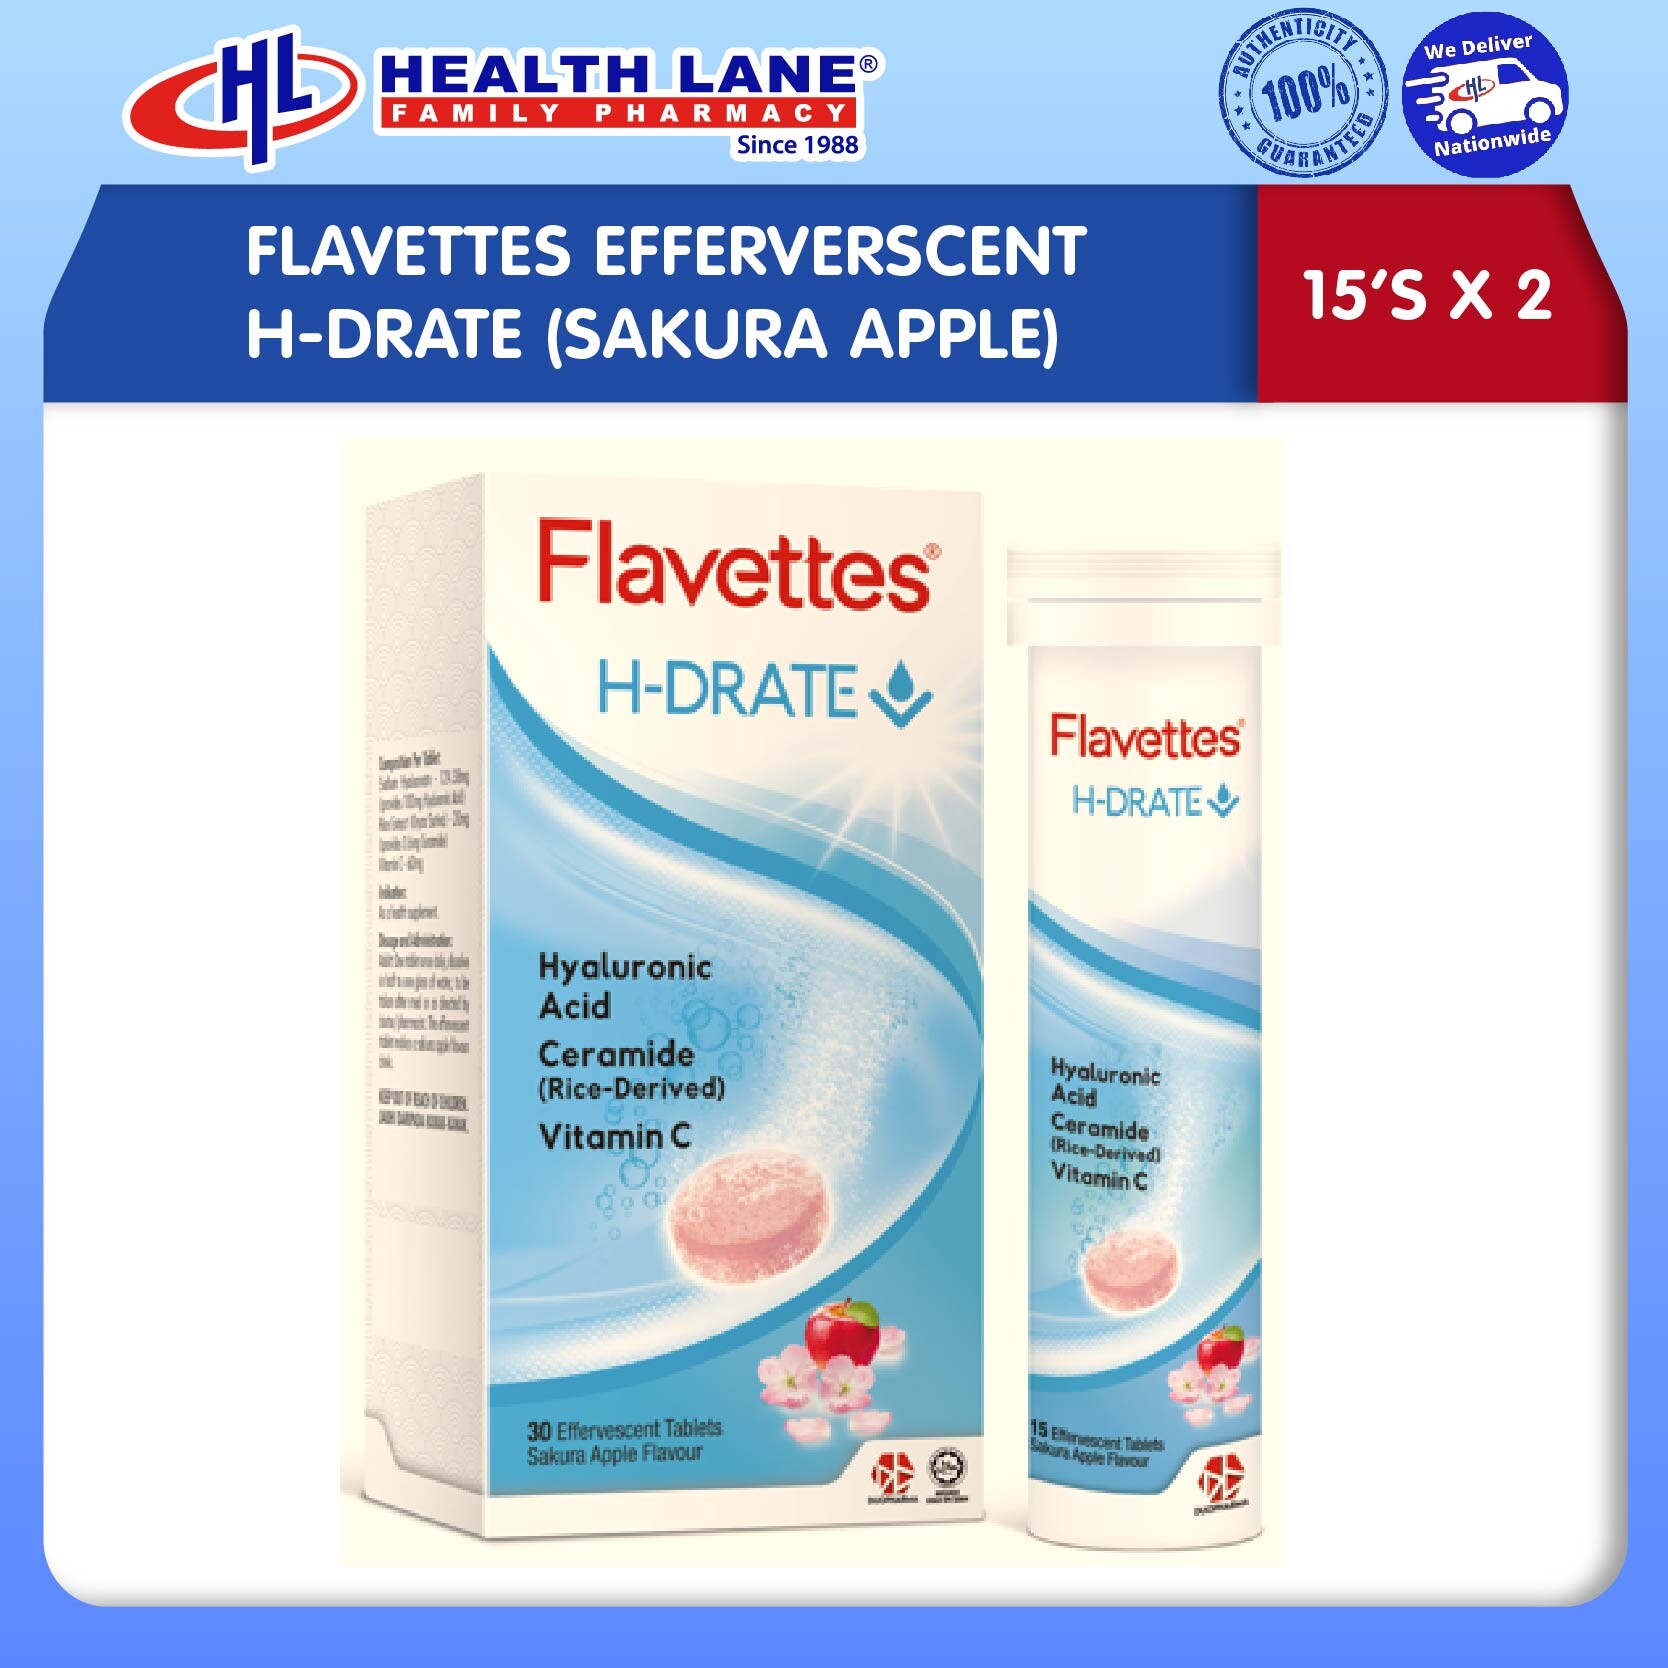 FLAVETTES EFFERVERSCENT H-DRATE (SAKURA APPLE) 15'Sx2